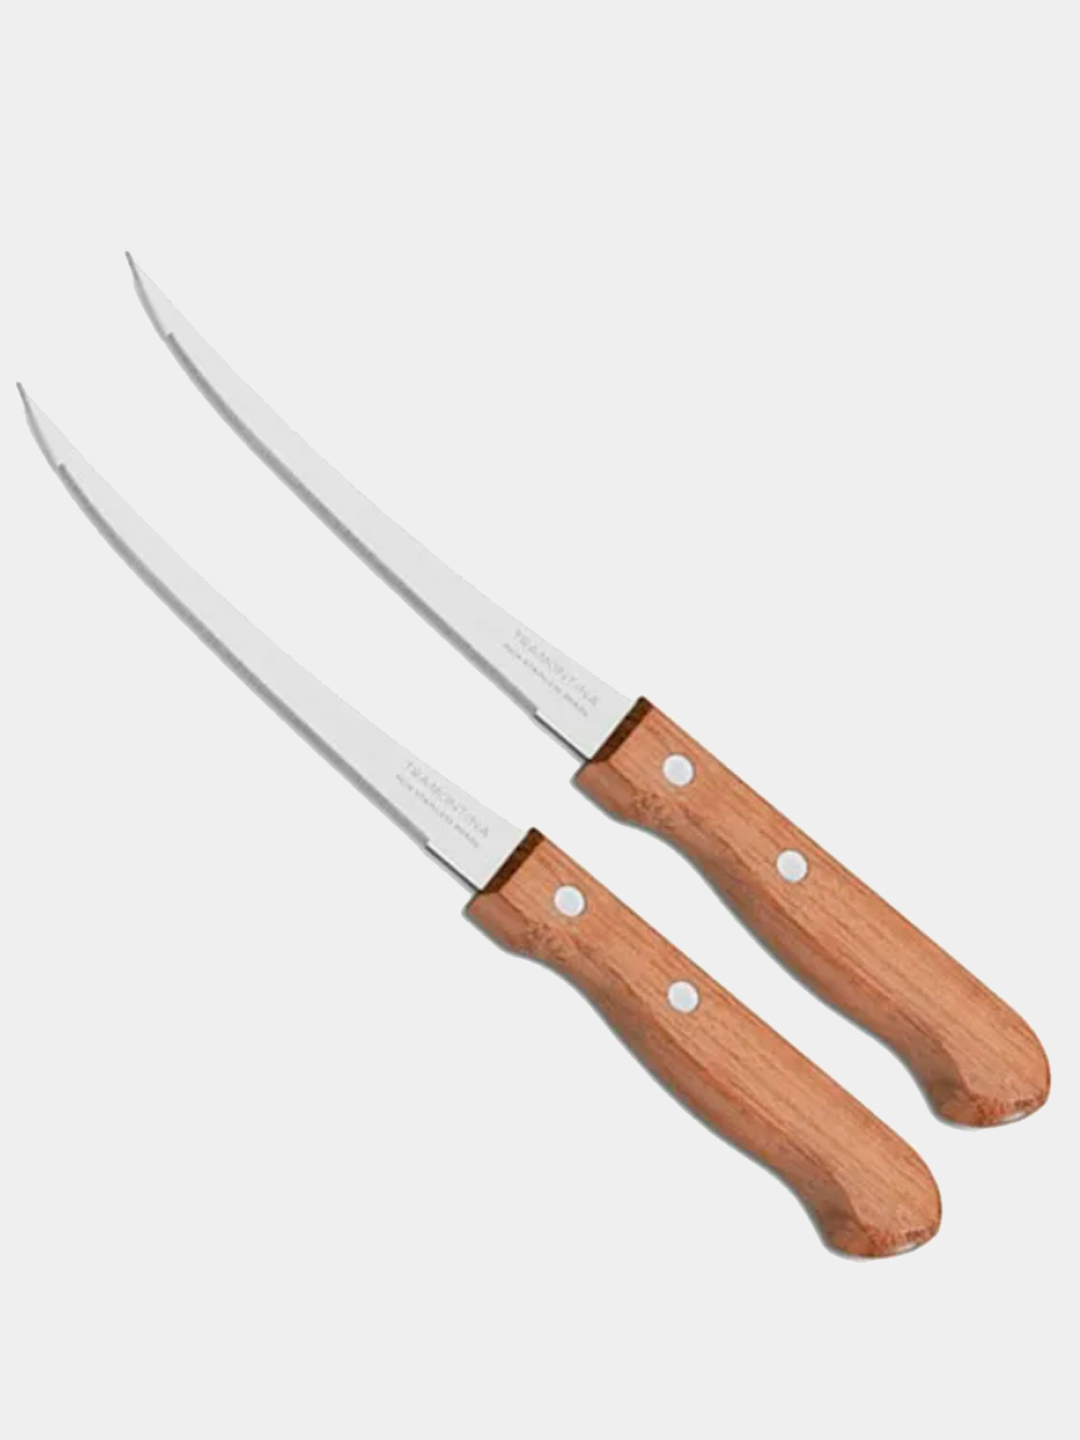 Tramontina Dynamic нож для томатов 12.7см 22327/005 871-542. Tramontina нож 12,7 см. Нож для томатов Трамонтина 12.5см м1194. Трамонтина ножи 12шт с деревянной ручкой.